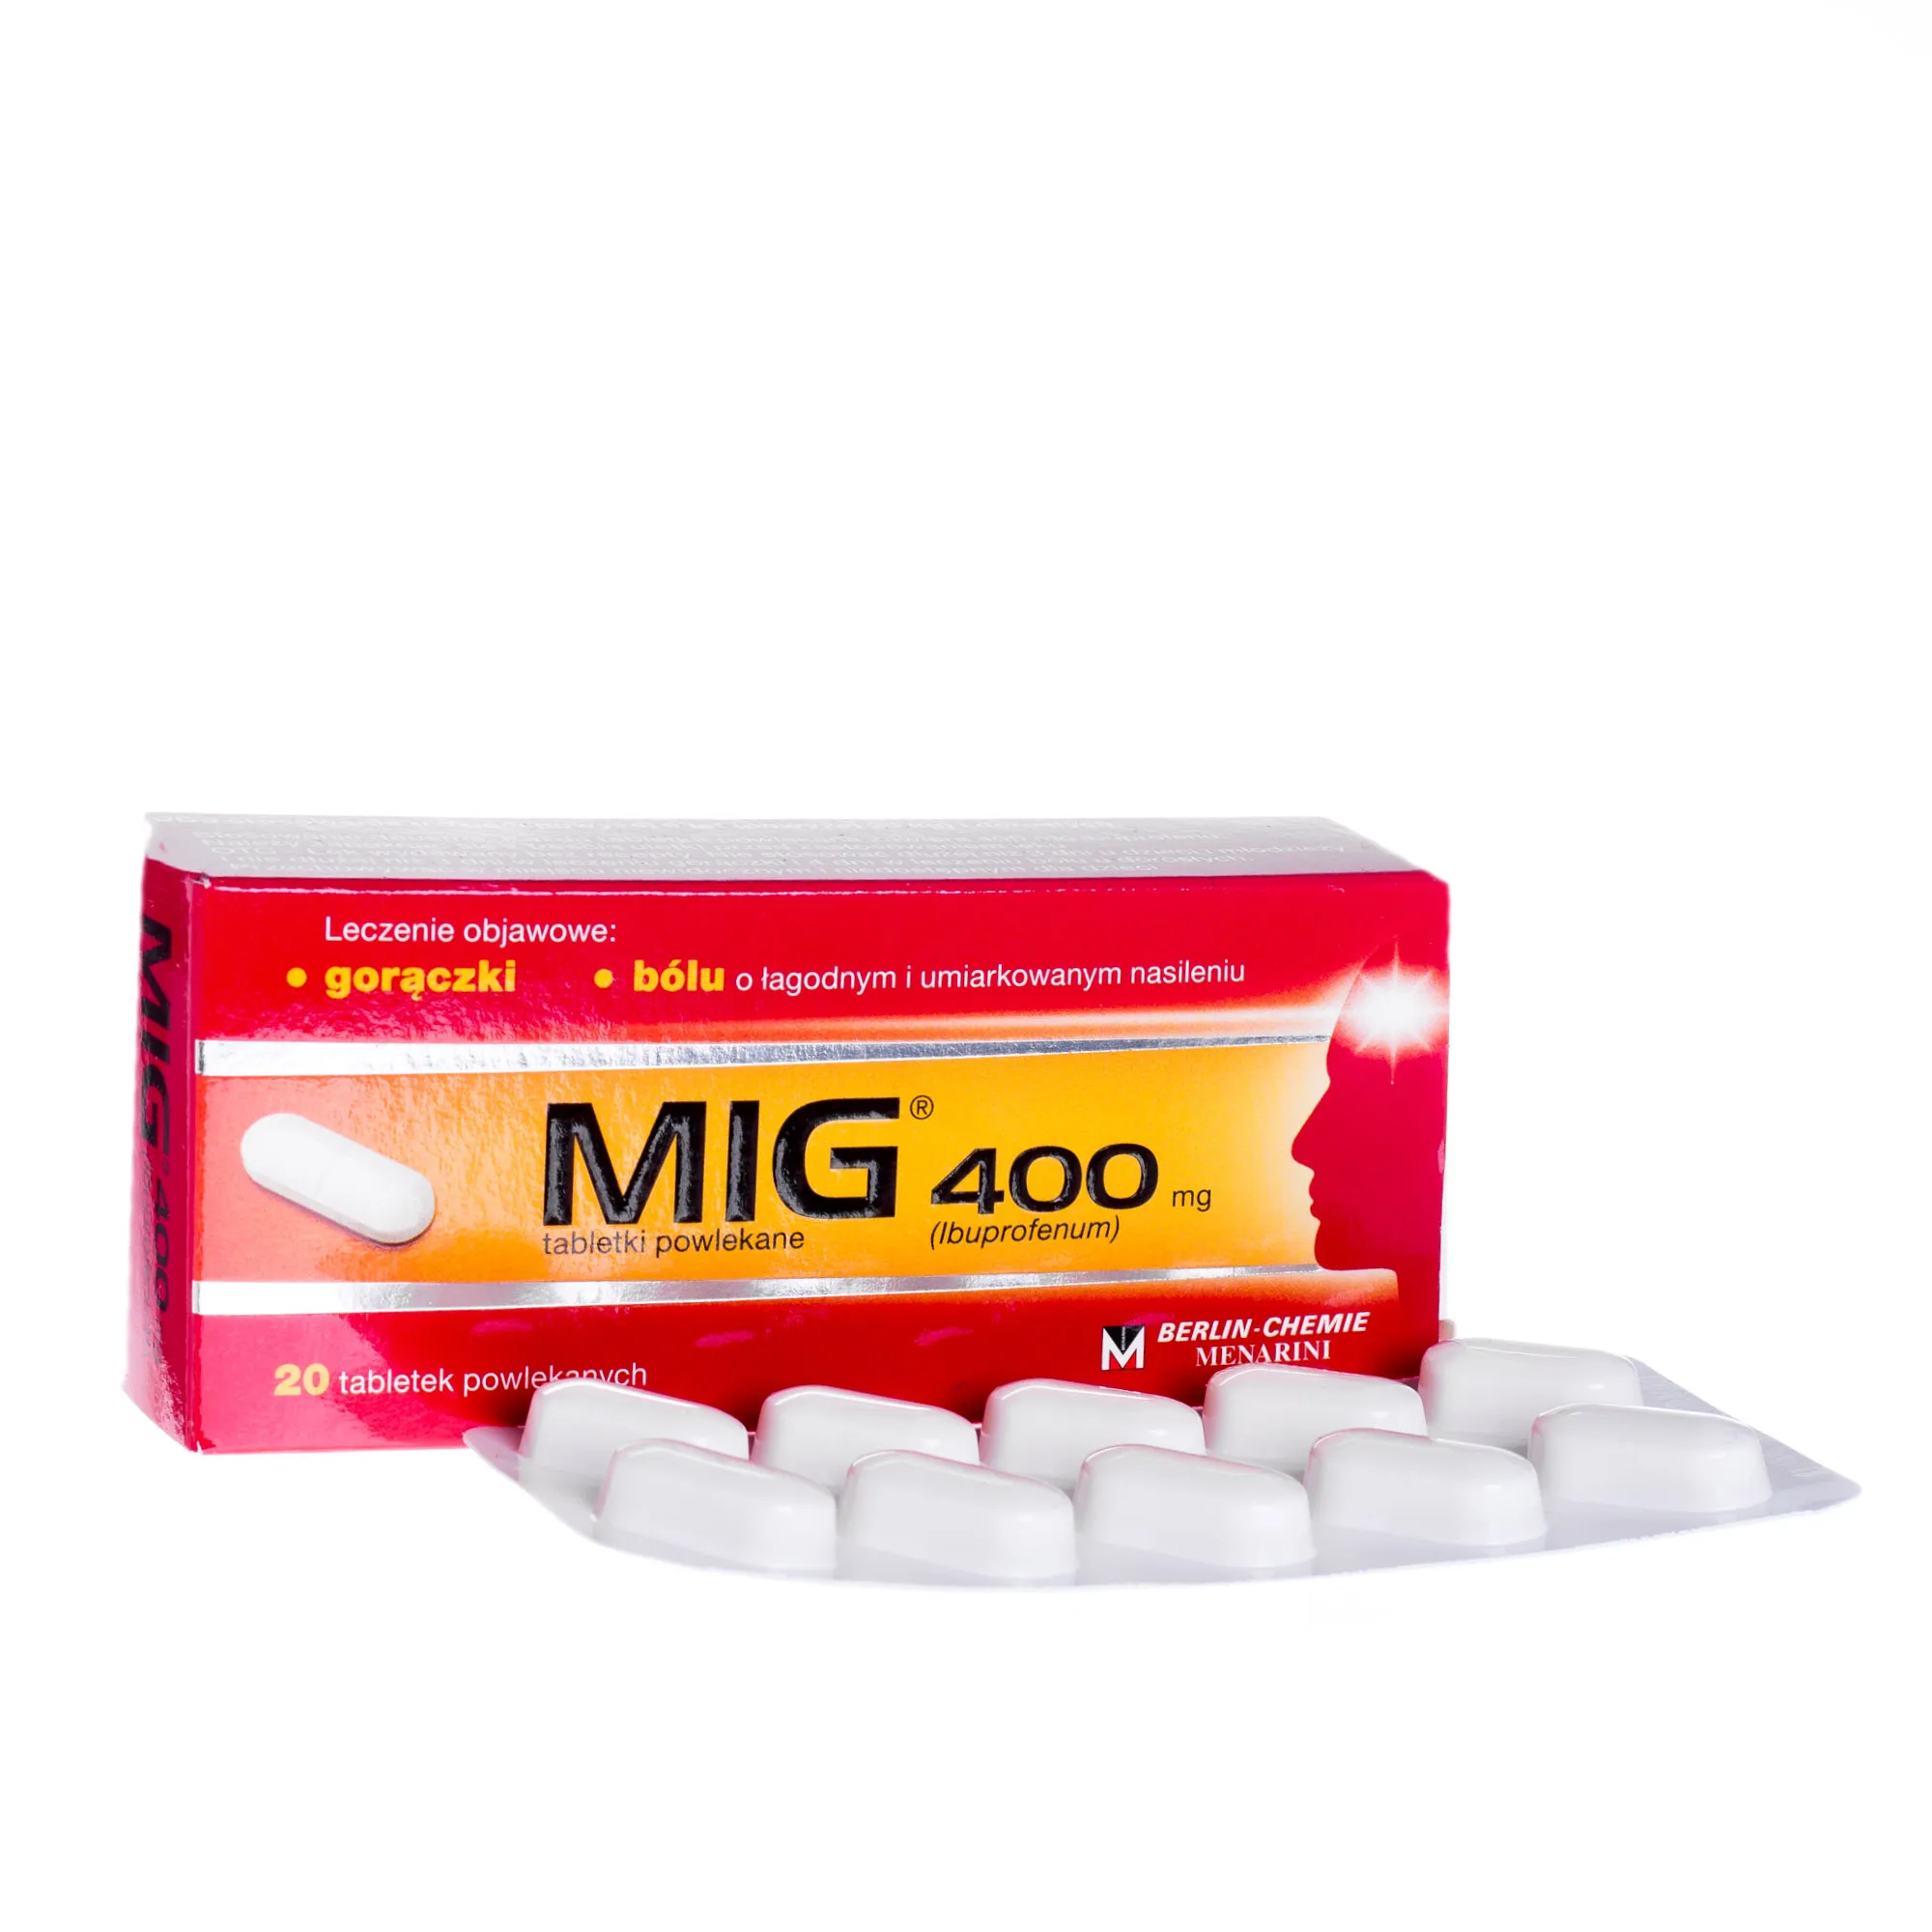 MIG 400 mg, 20 tabletek powlekanych 